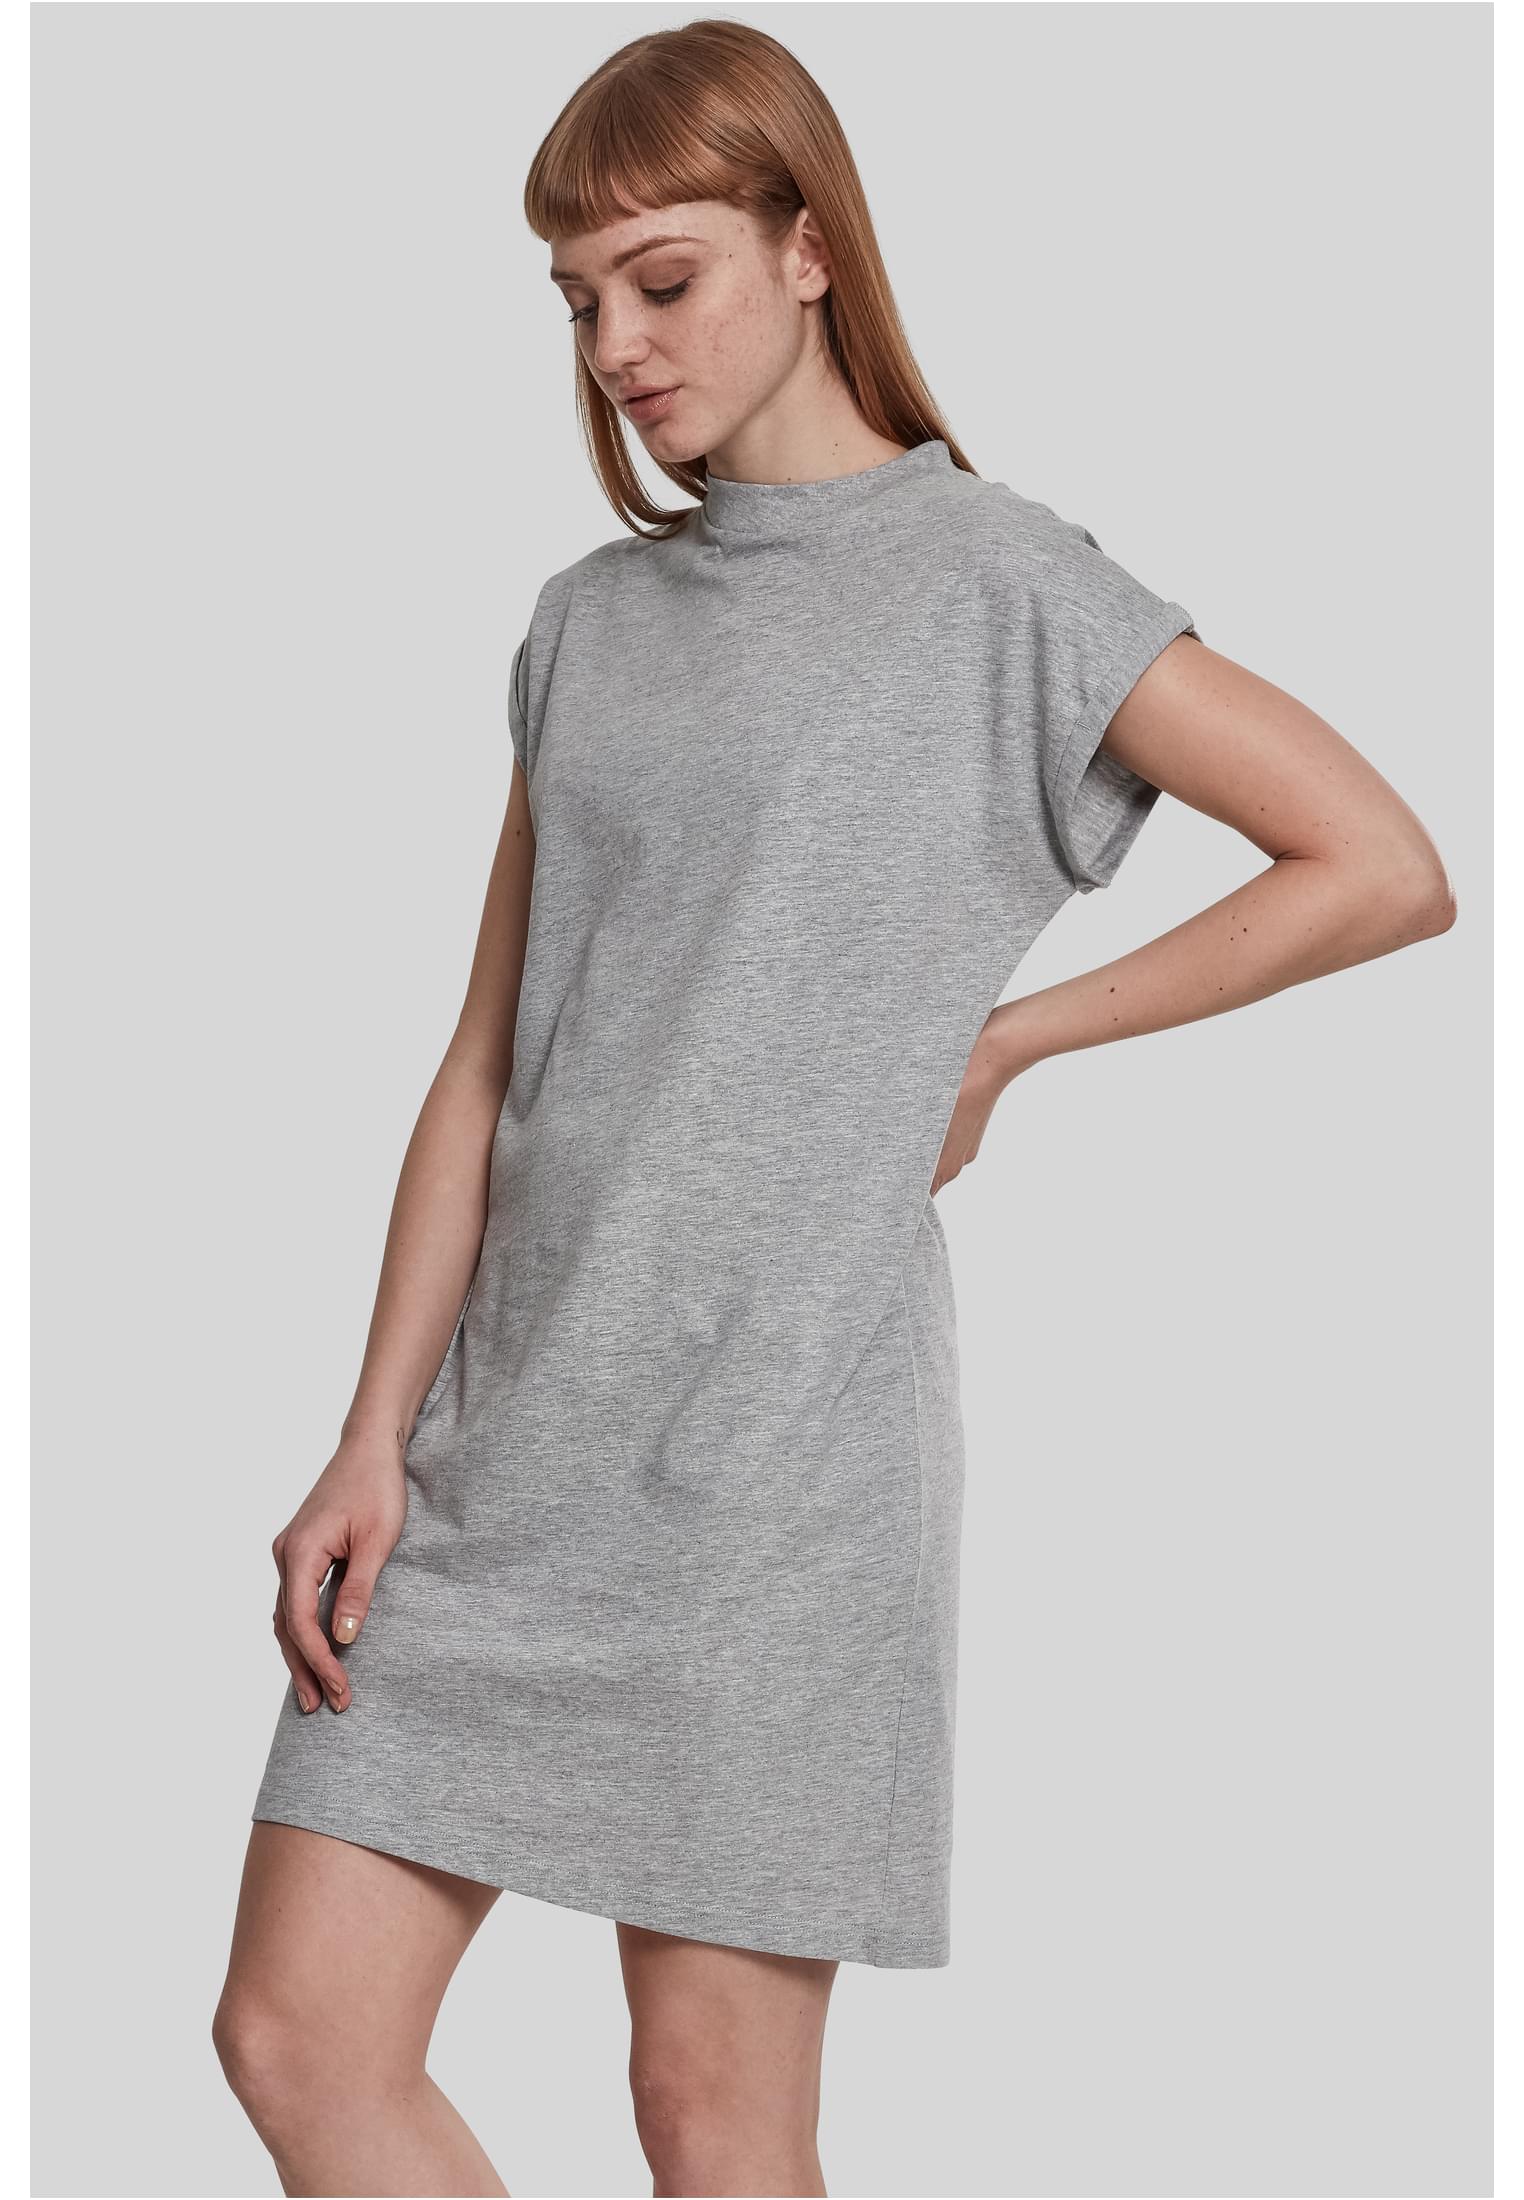 Frauen Ladies Turtle Extended Shoulder Dress in Farbe grey